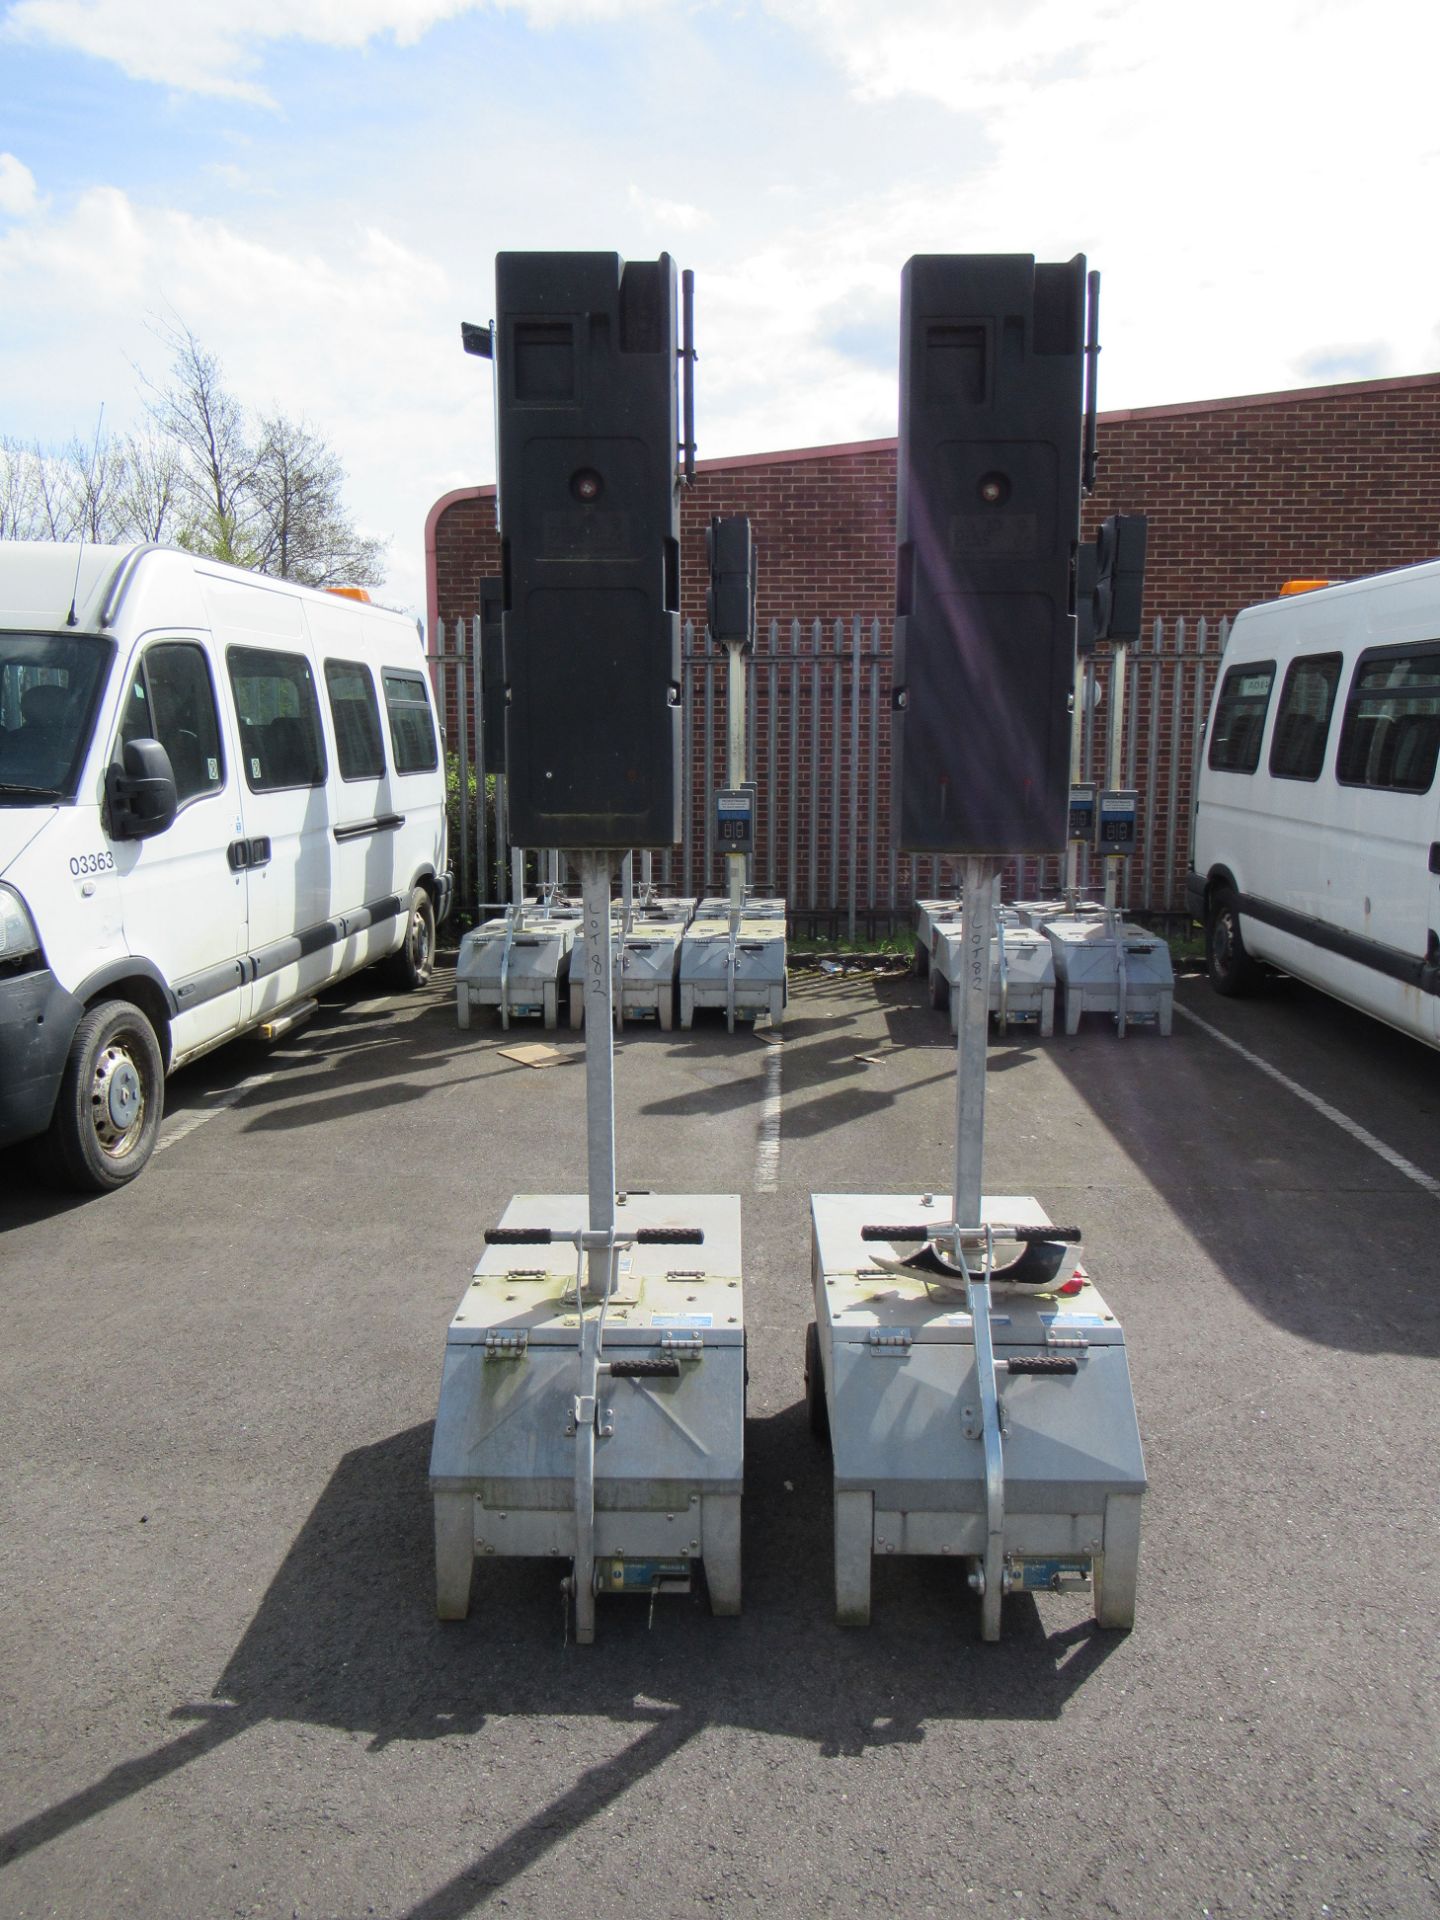 A Pair of Pike Signals Ltd "Pedestrian" Battery Powered Portable Traffic Light Units